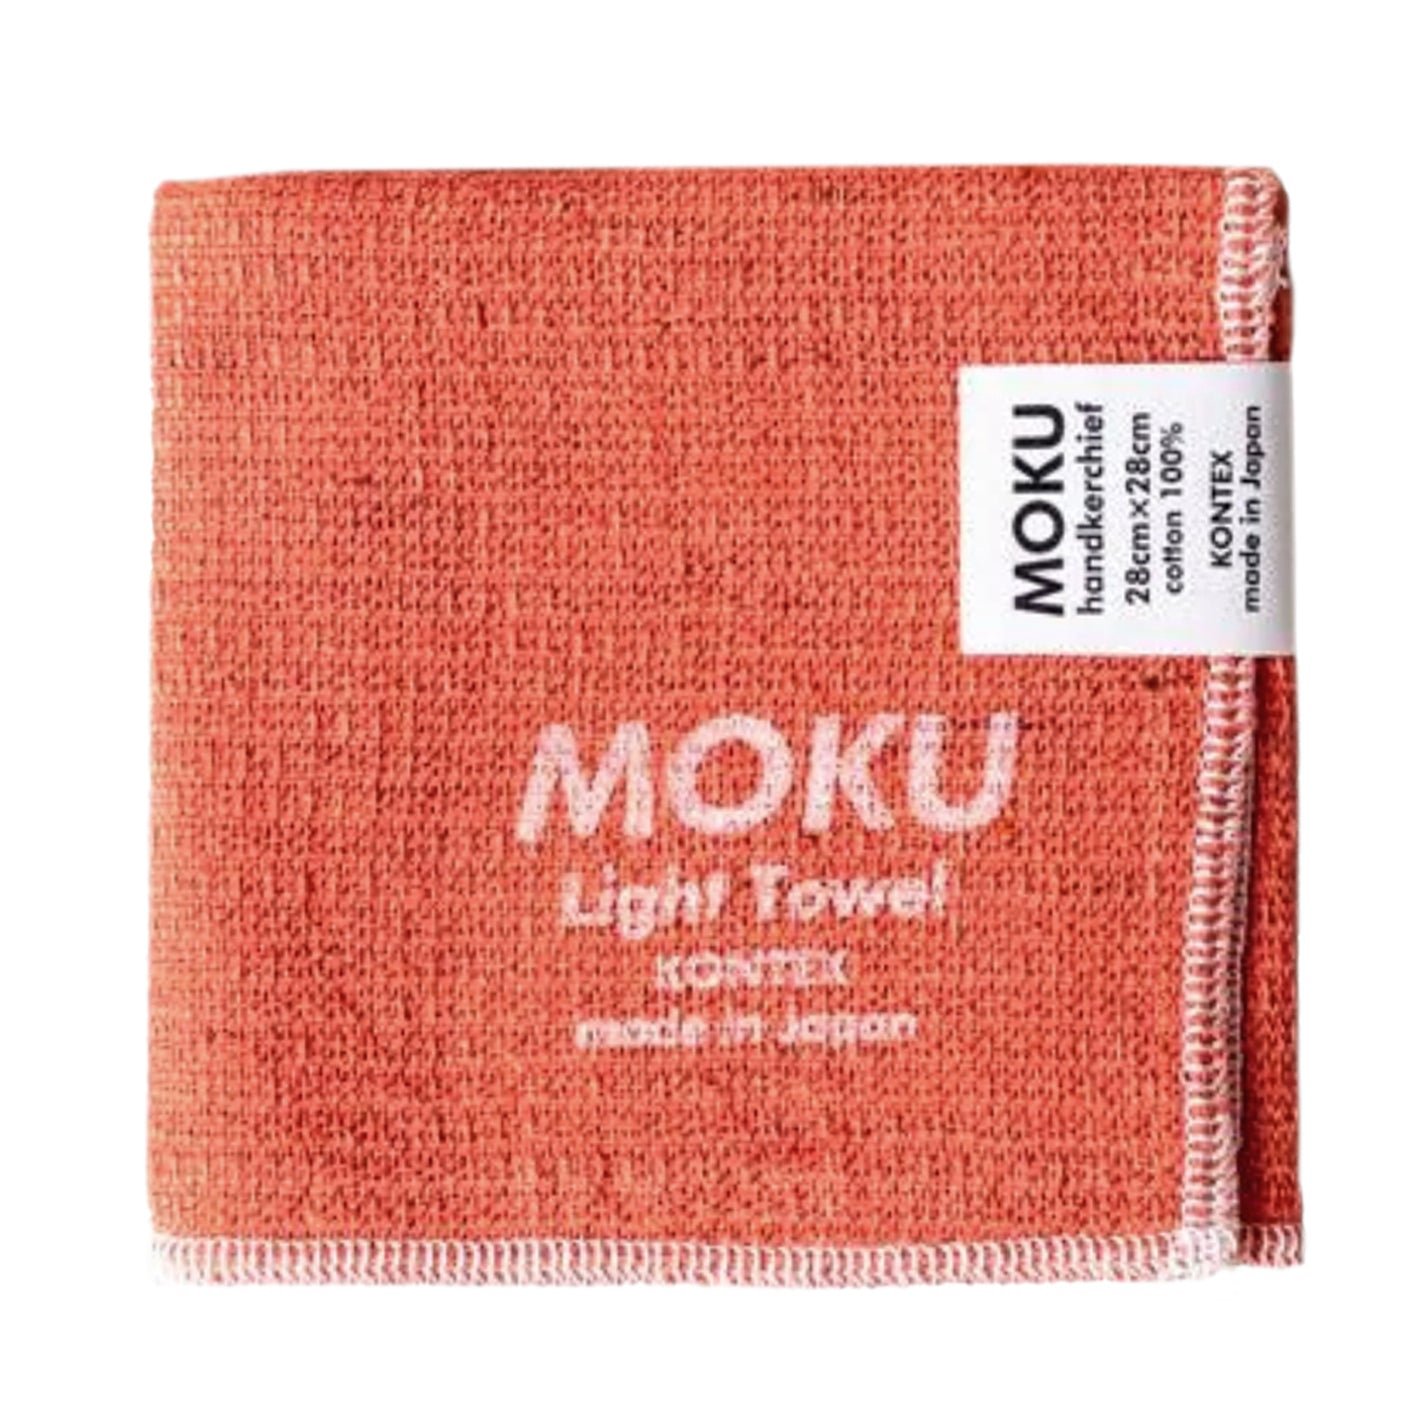 Kontex MOKU Handkerchief - Orange